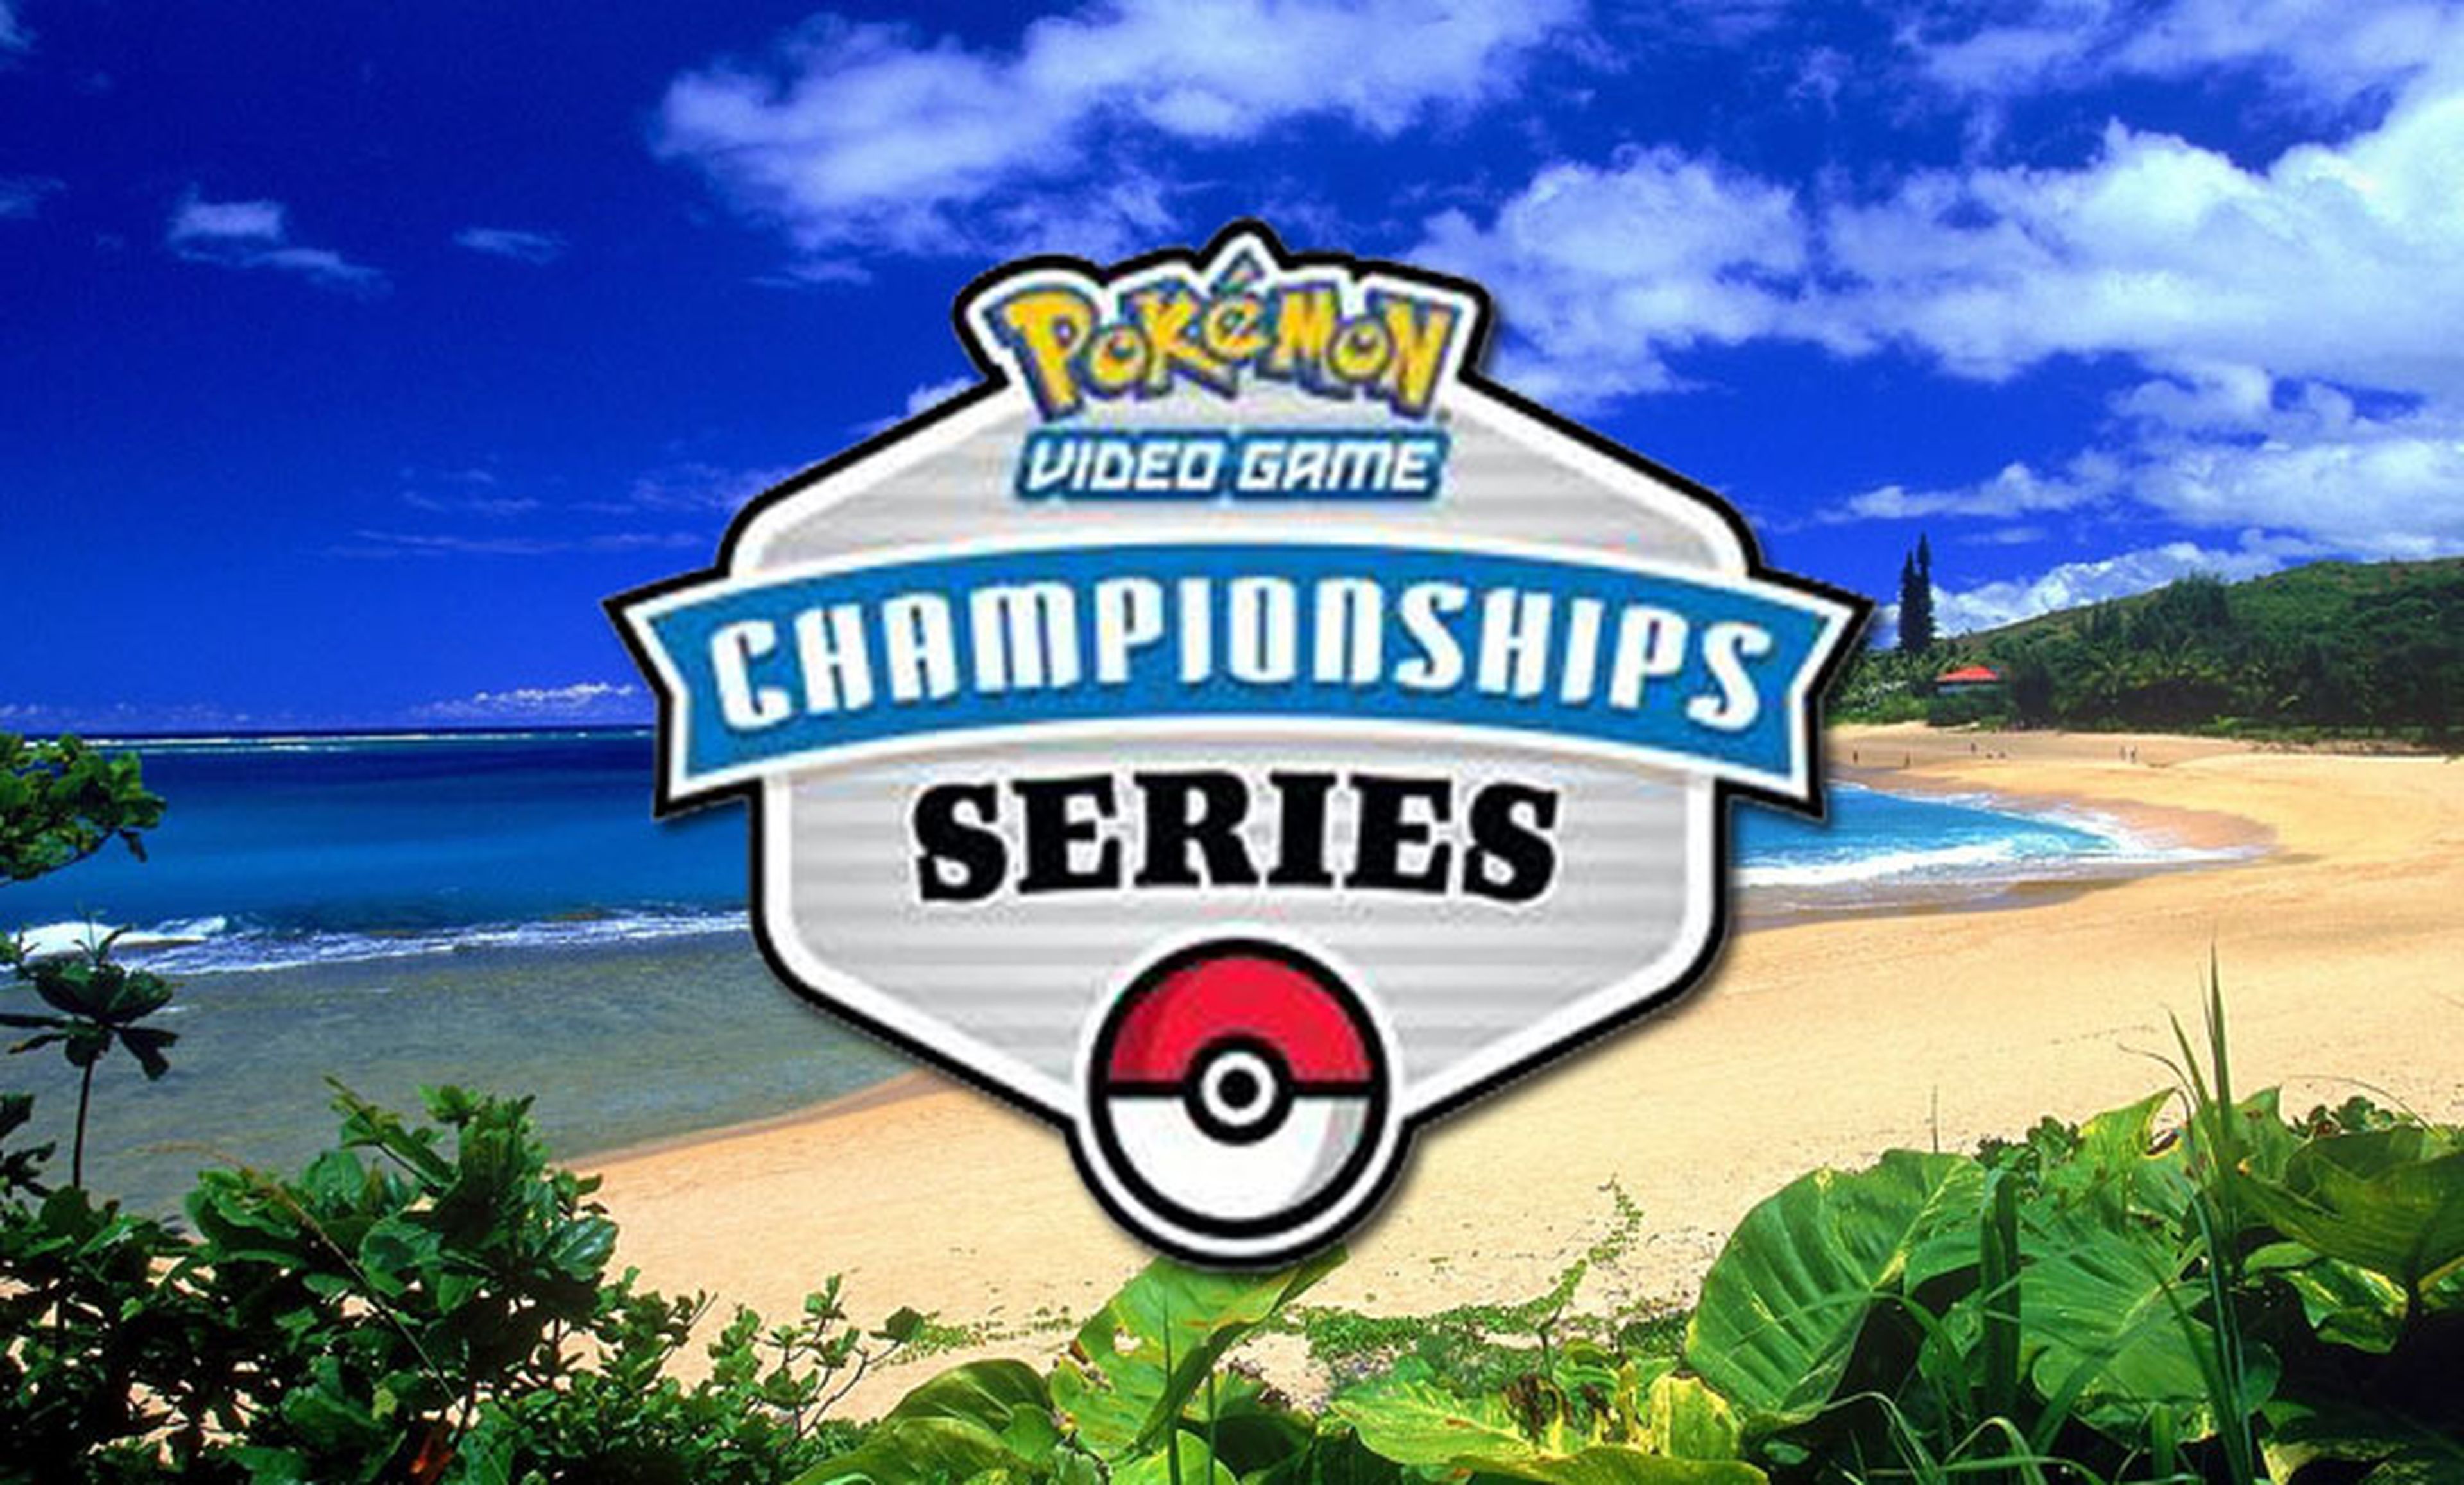 Campeones Pokémon rumbo a Hawái